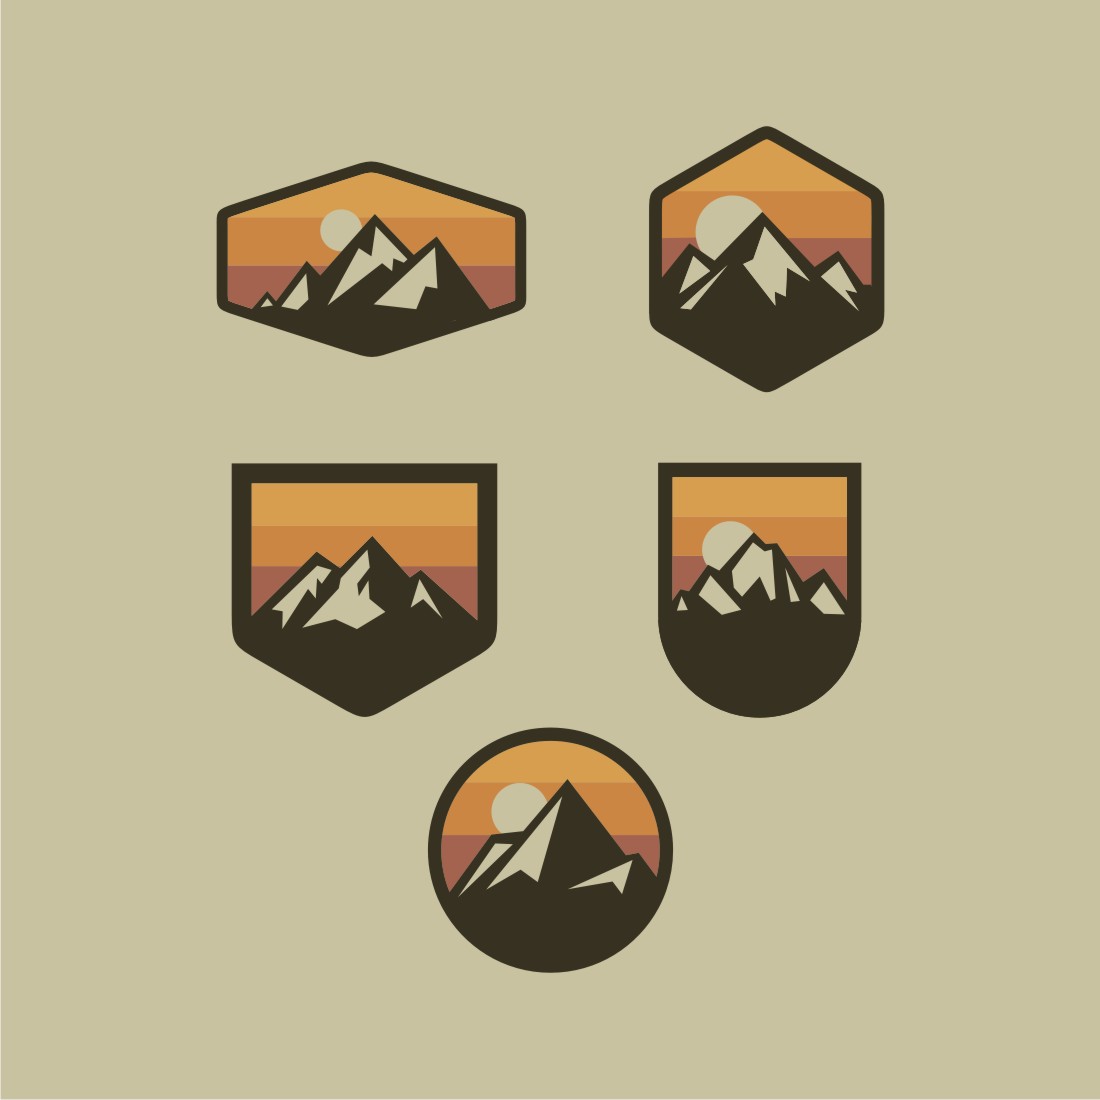 Beautiful Mountain Logo Set Cover Image.